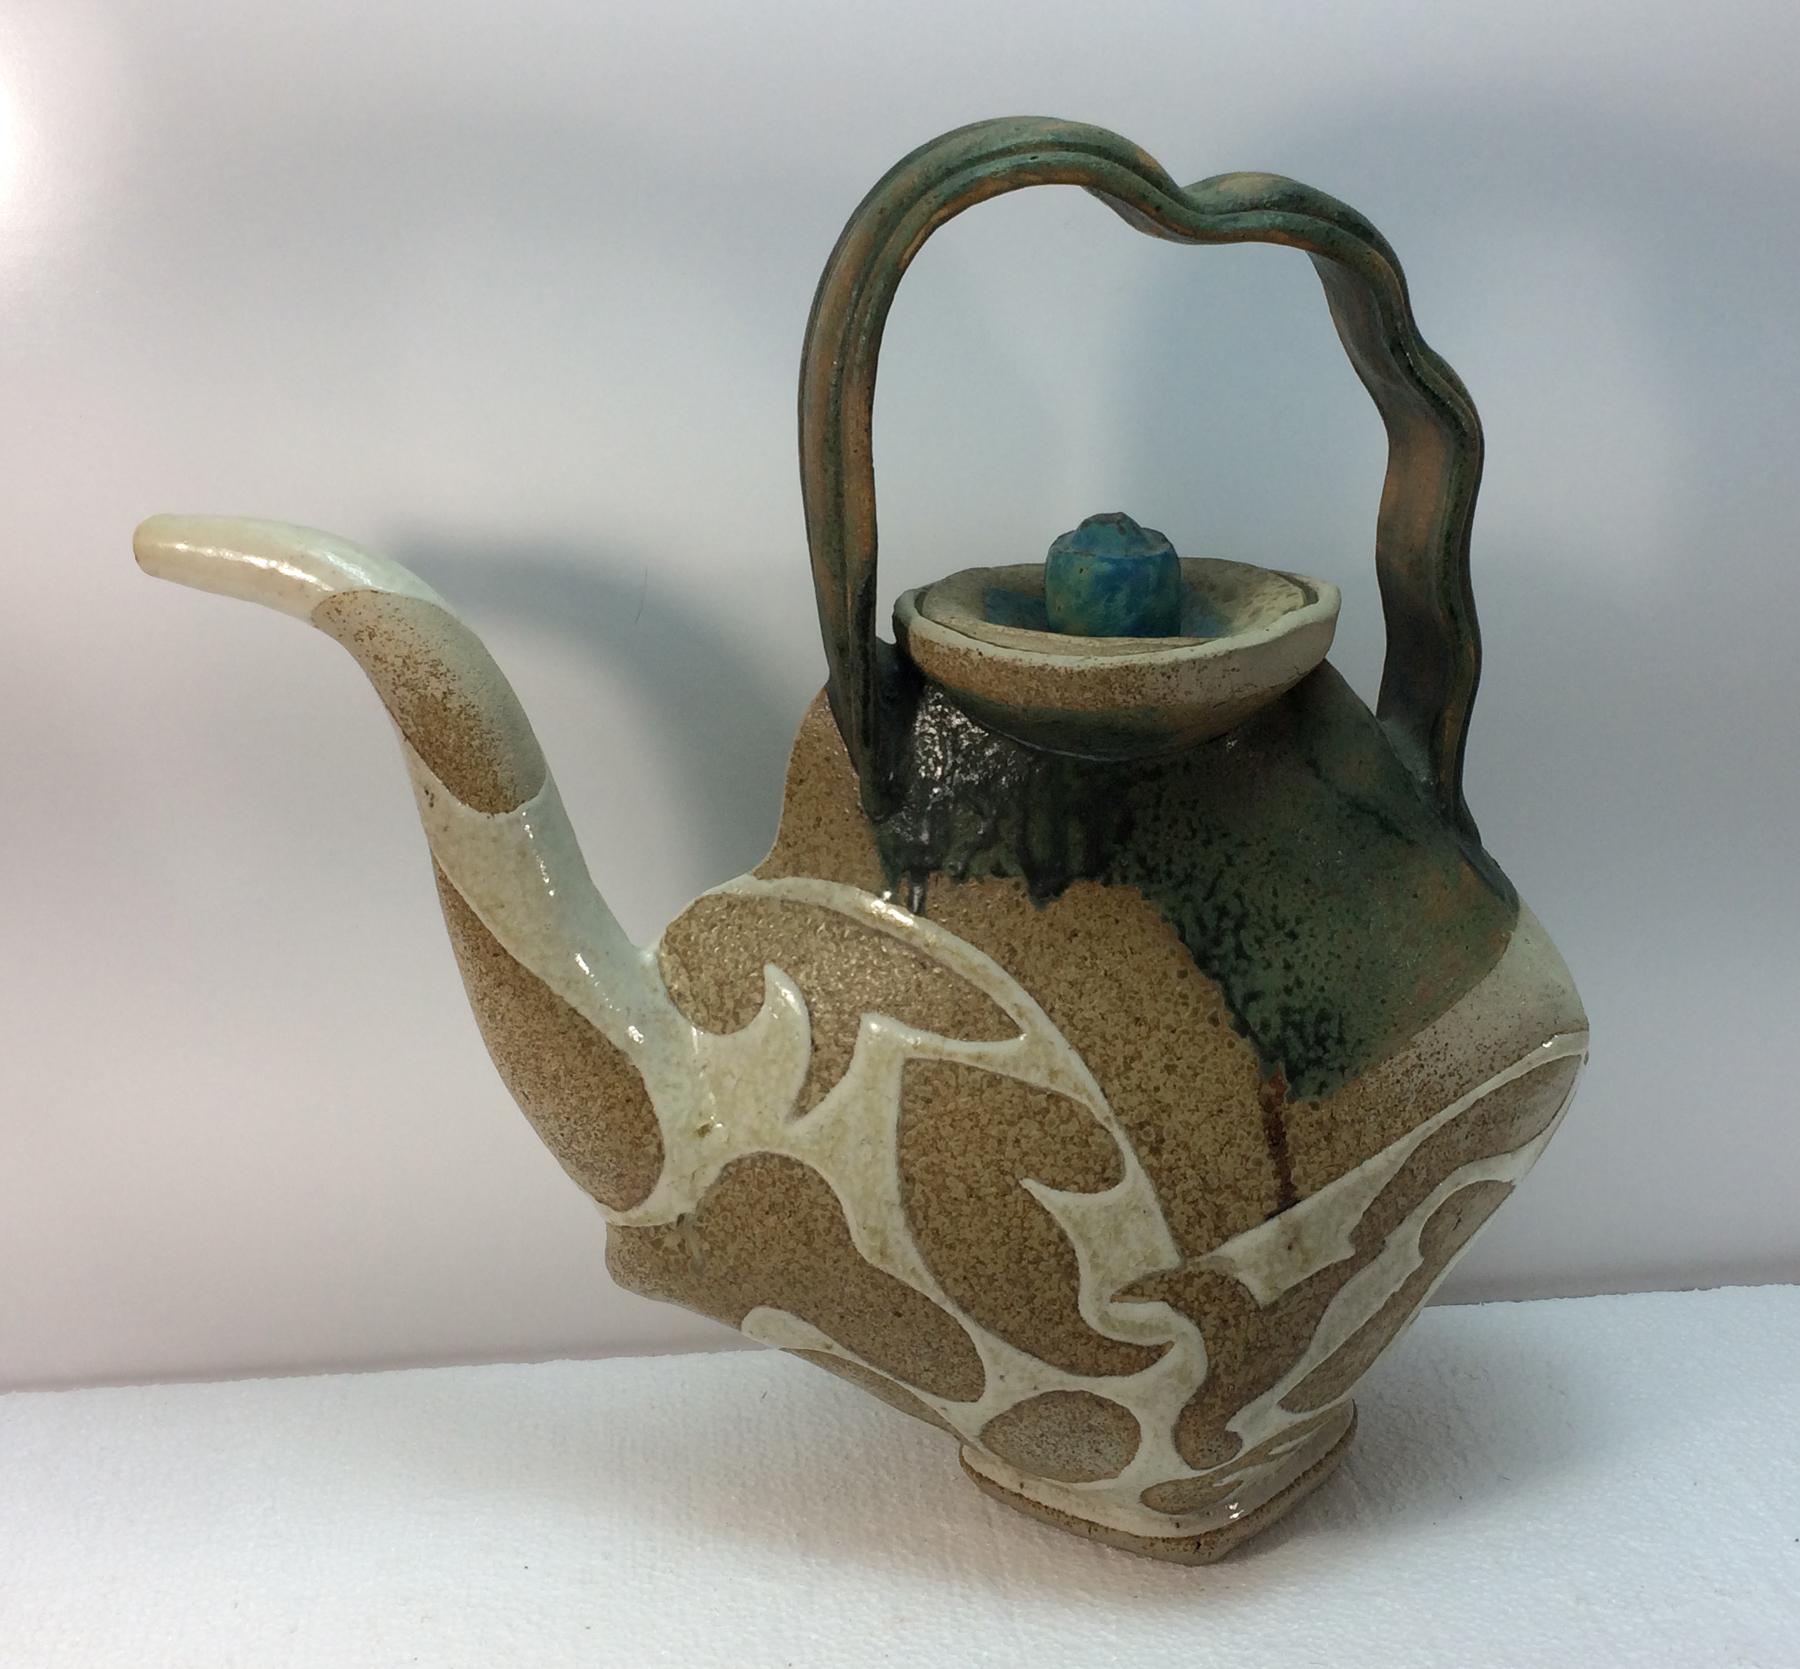 studio pottery teapot